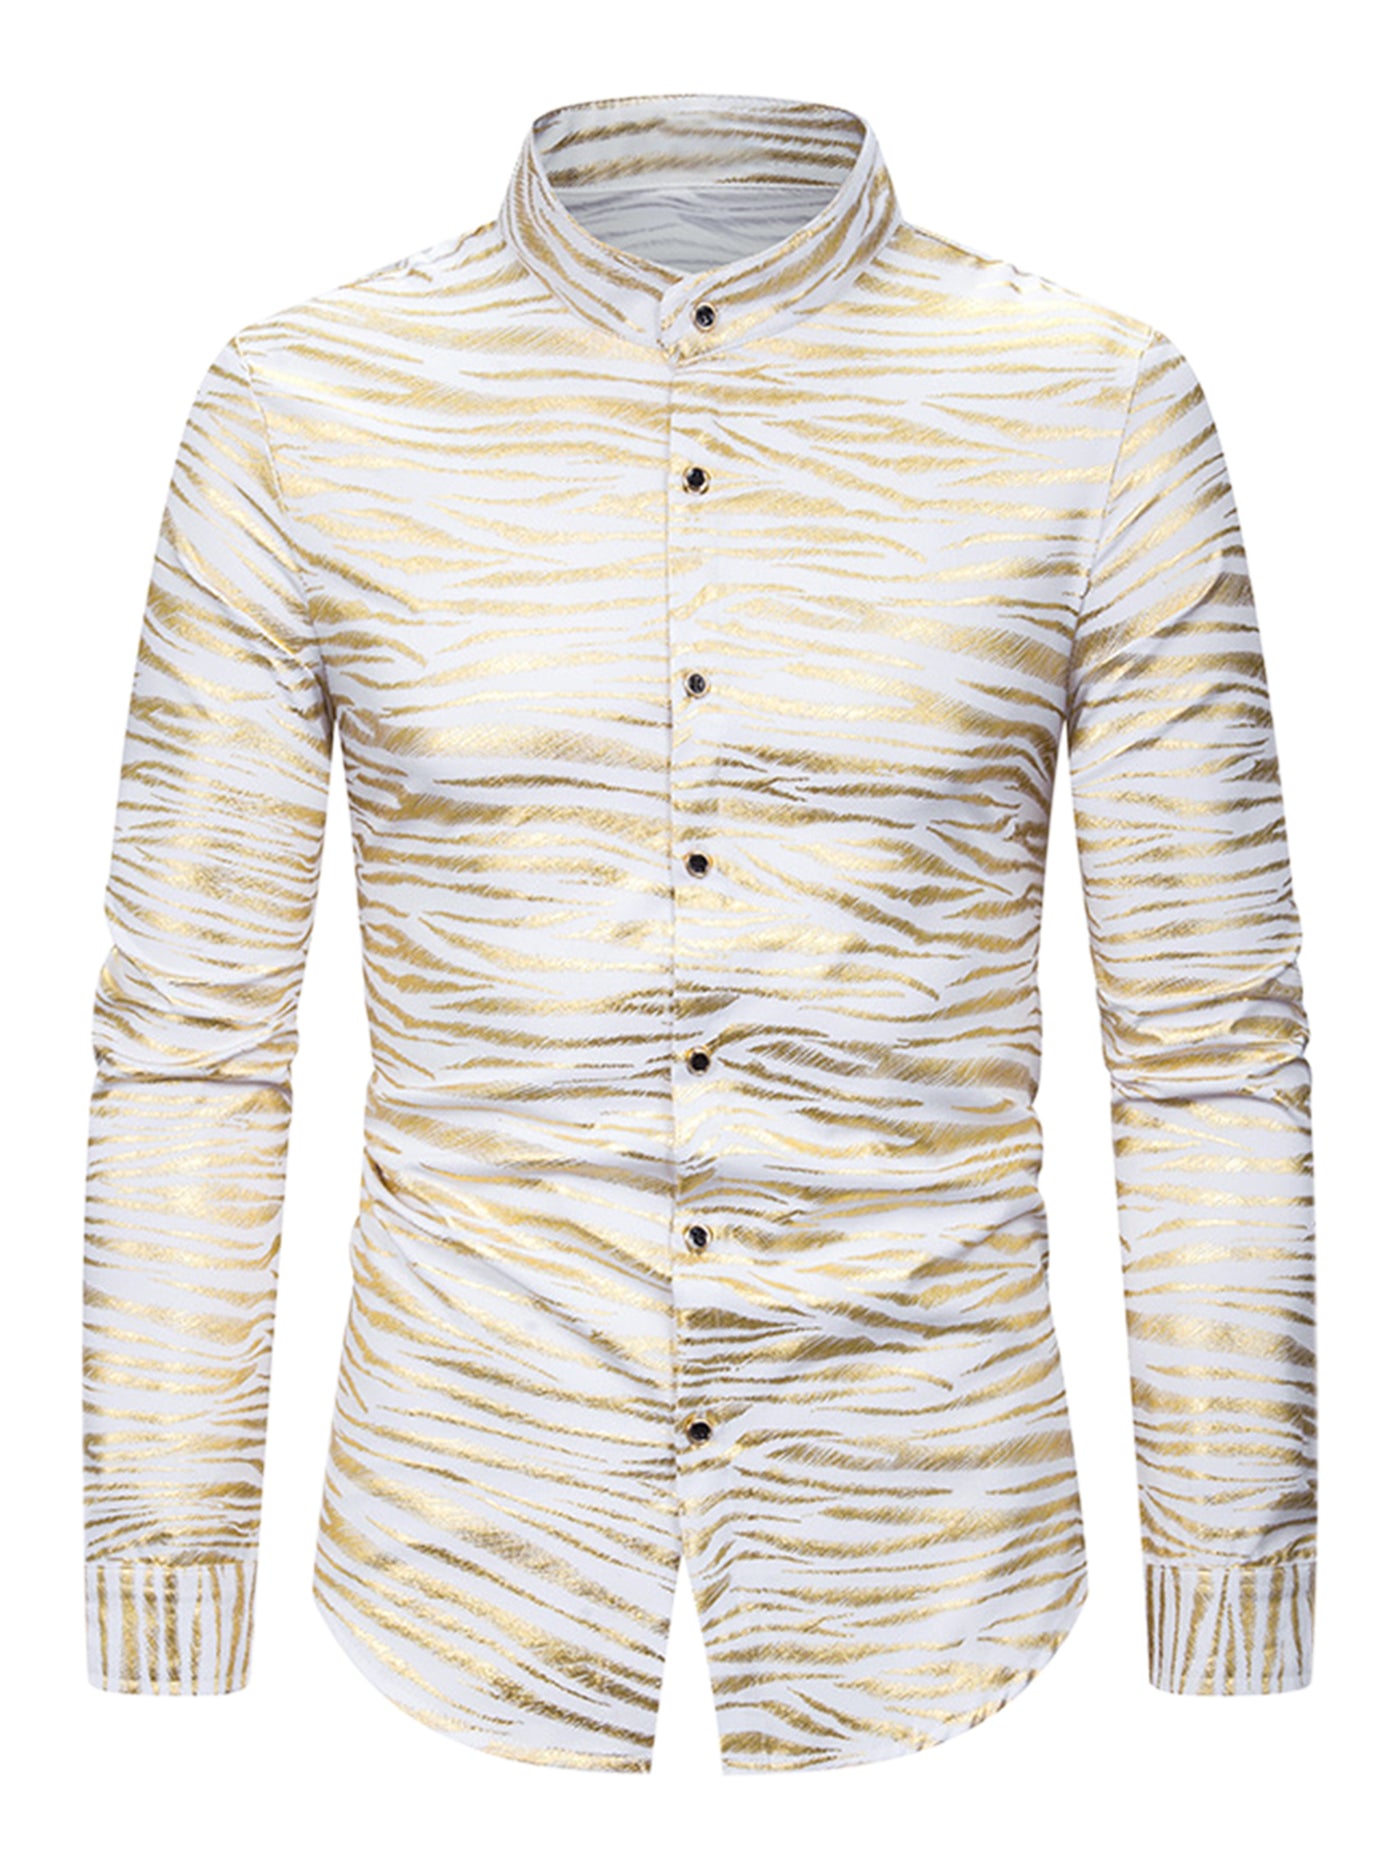 Bublédon Men's Animal Printed Shirts Long Sleeves Button Down Party Dress Shirt